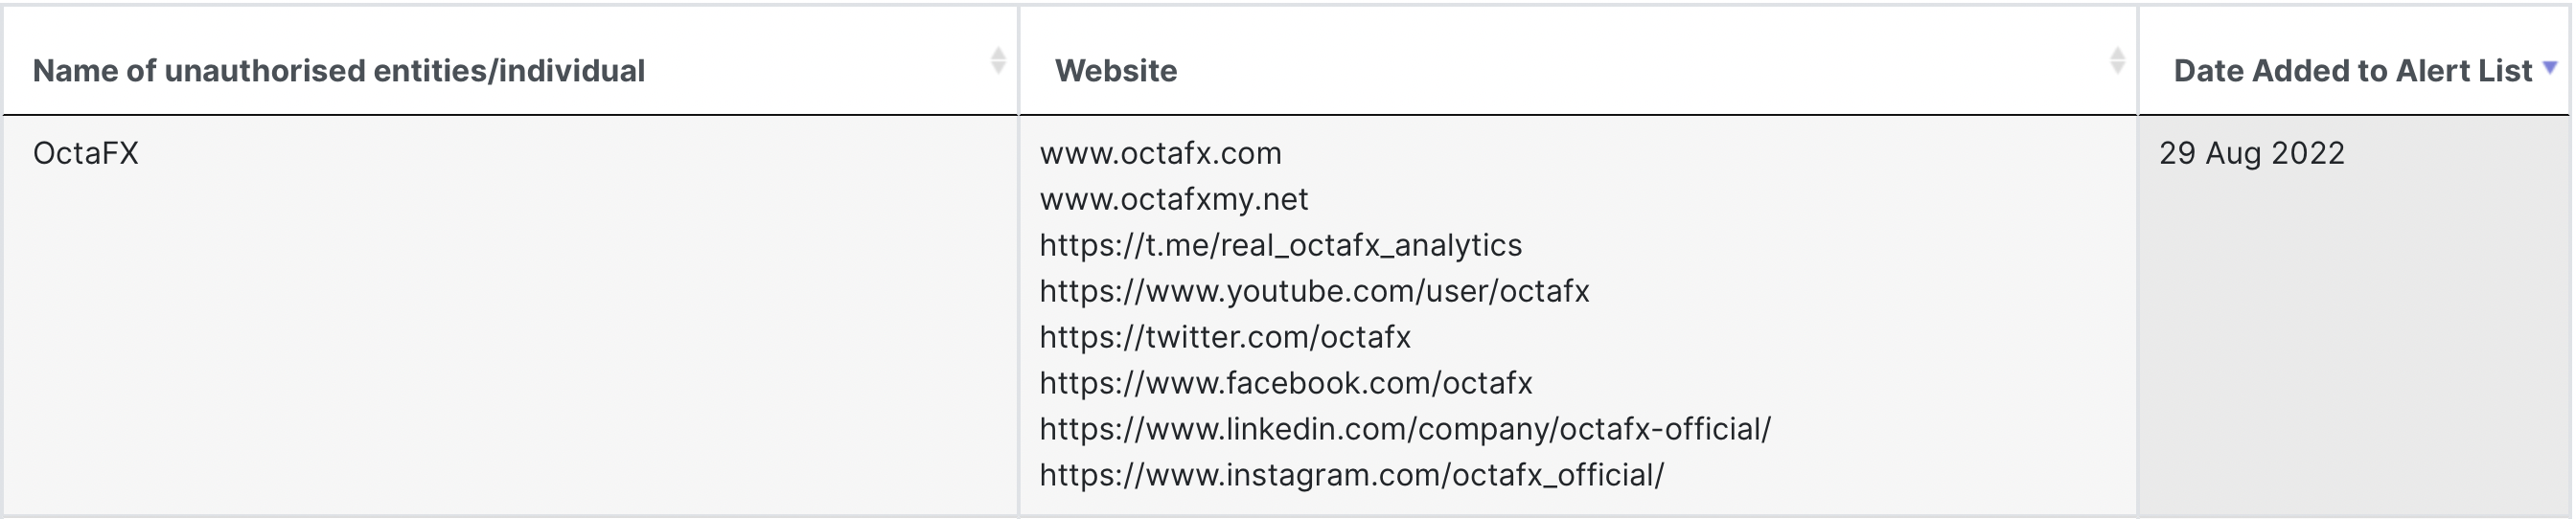 Octafx now in bank negara's financial alert list, investment not approved under m'sian law | weirdkaya